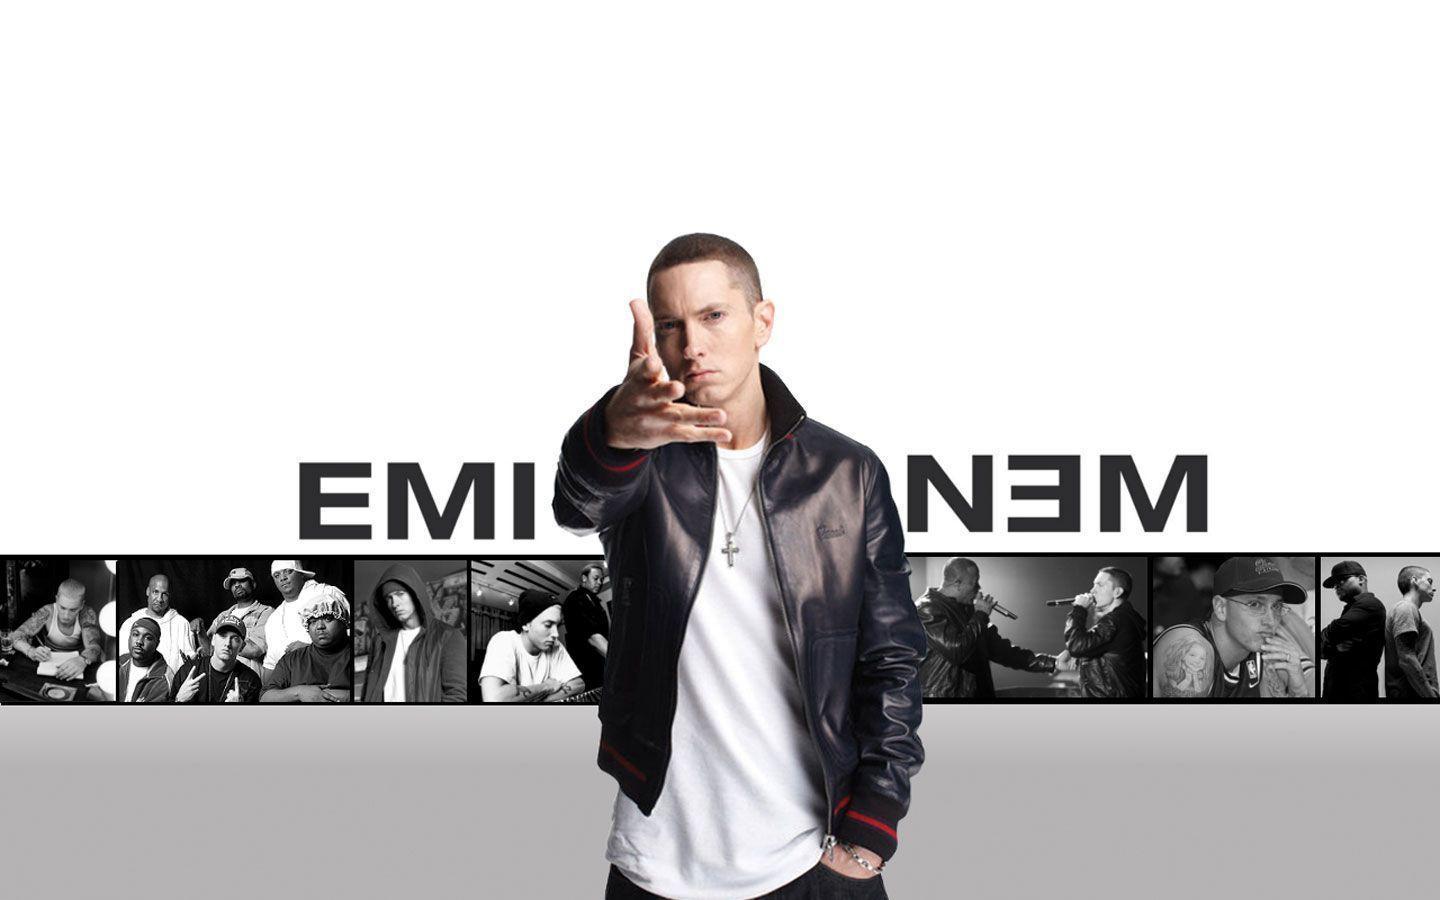 Eminem Photo Wallpaper Free Download Wallpaper. Wallpaper